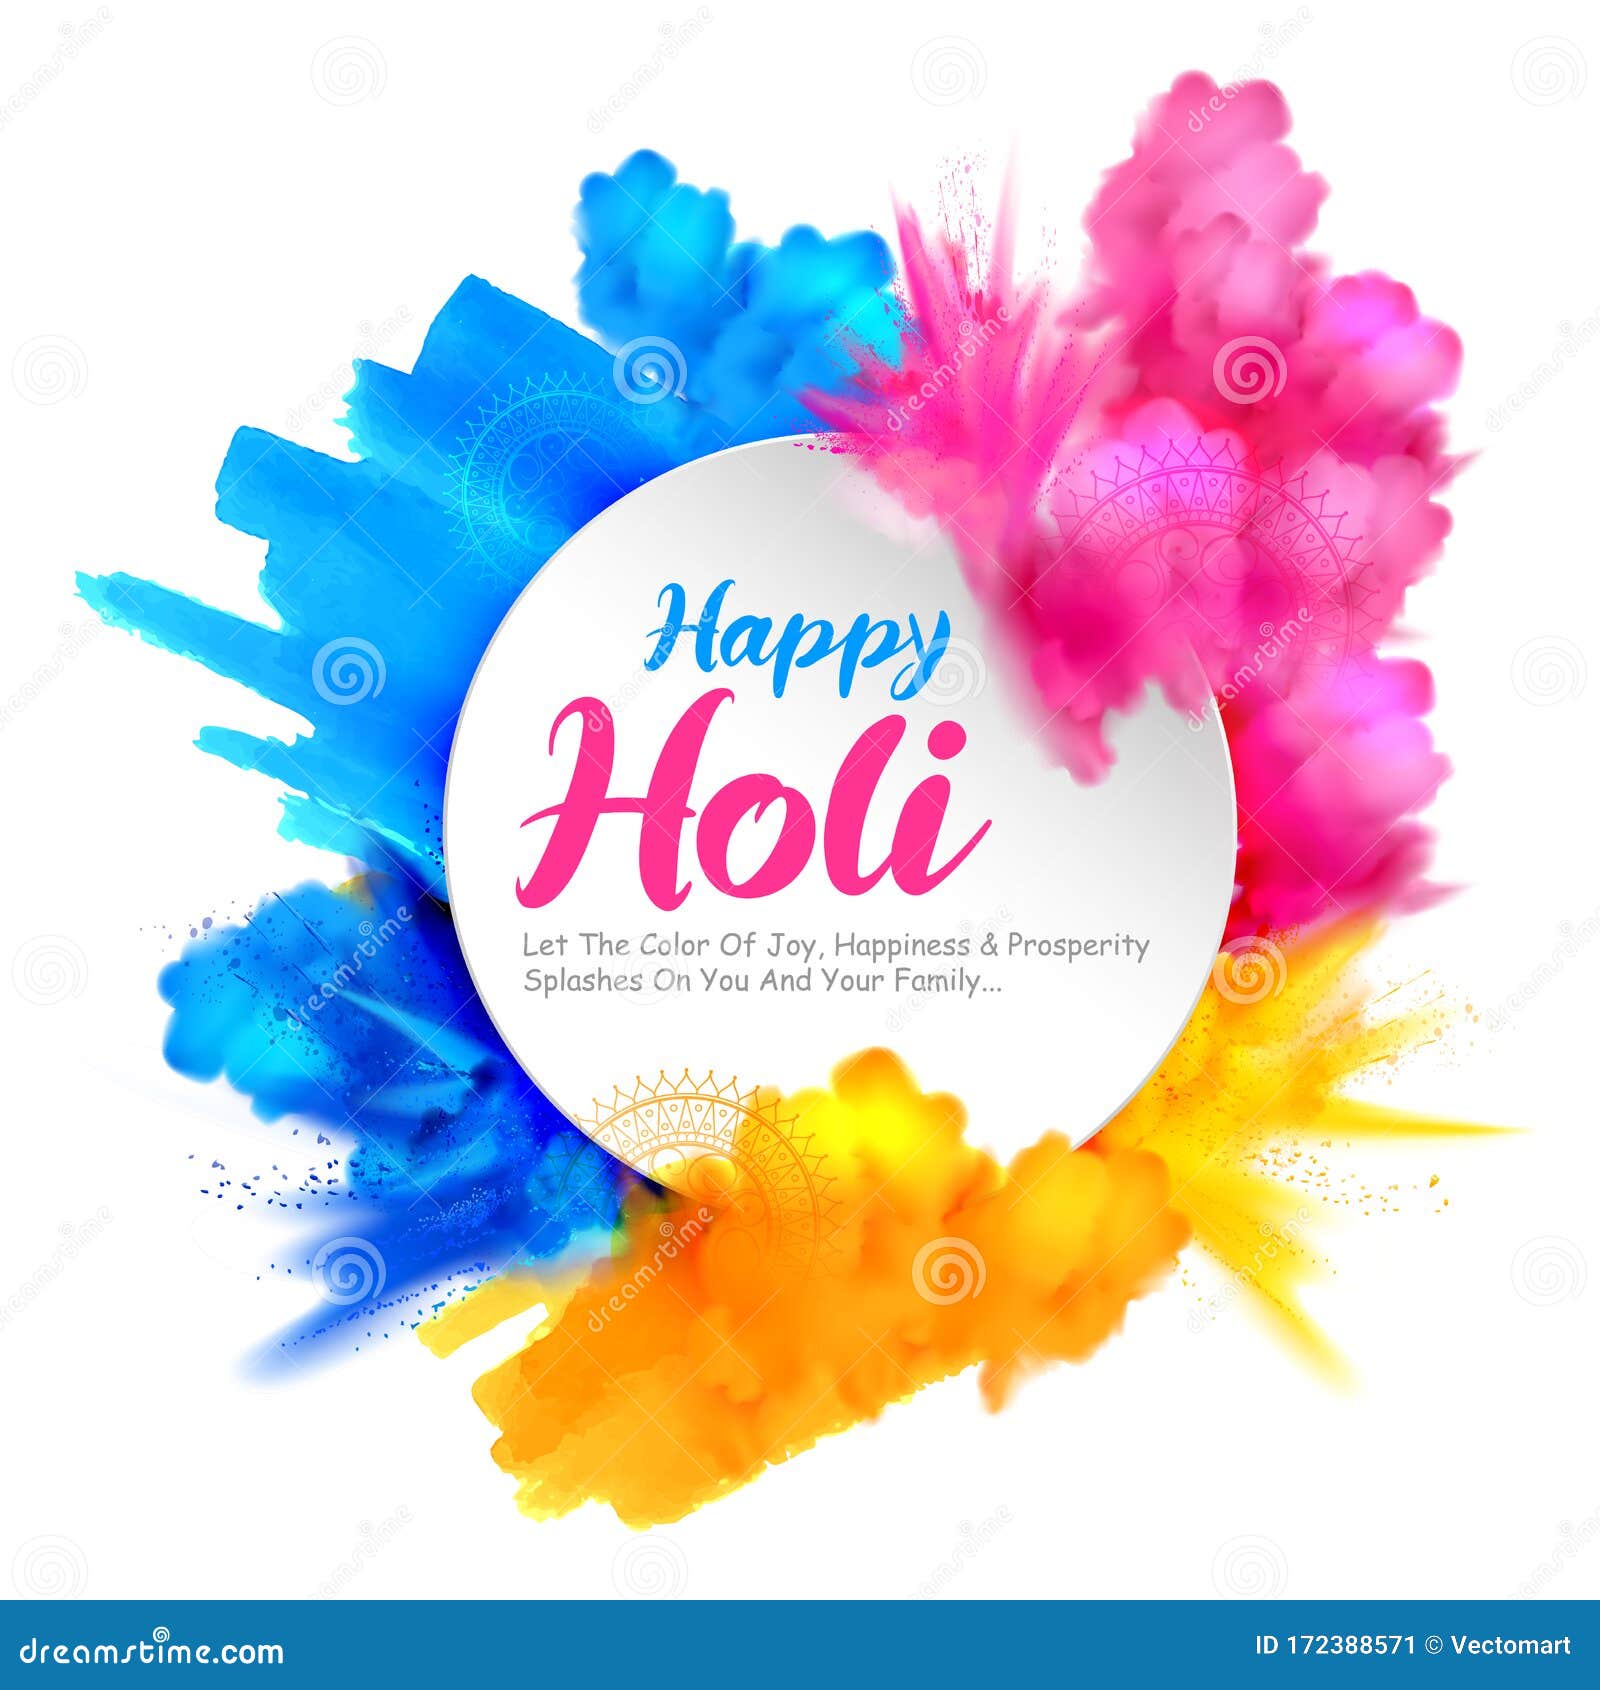 Holi editing background hd  Happy holi editing background hd download